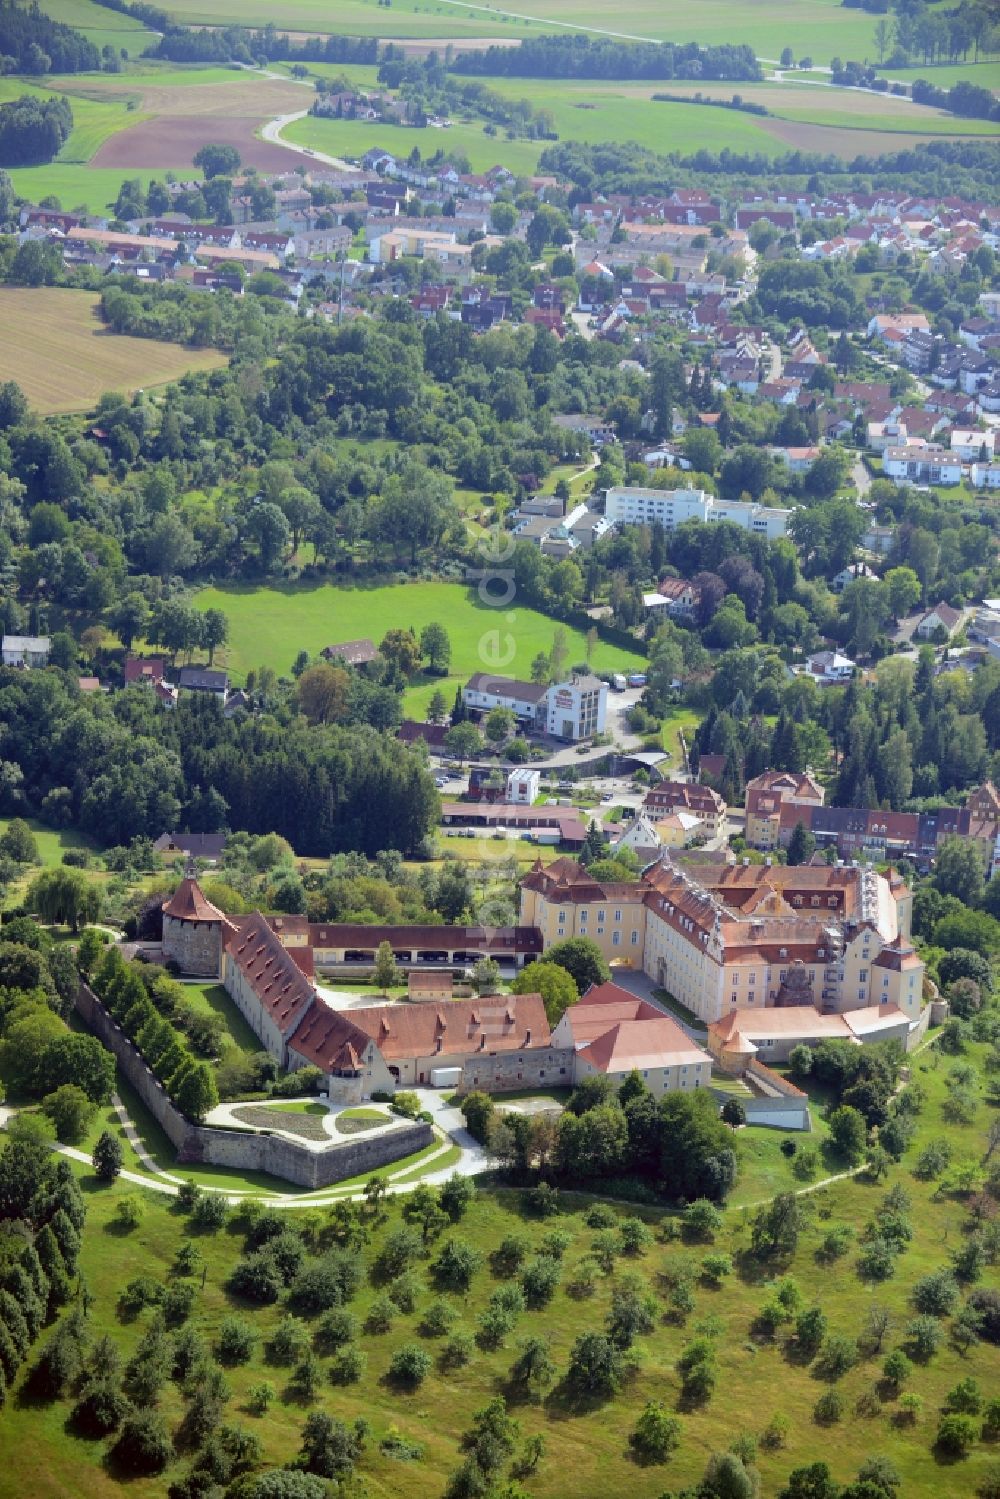 Ellwangen (Jagst) aus der Vogelperspektive: Burganlage des Schloss Schloß ob Ellwangen in Ellwangen (Jagst) im Bundesland Baden-Württemberg